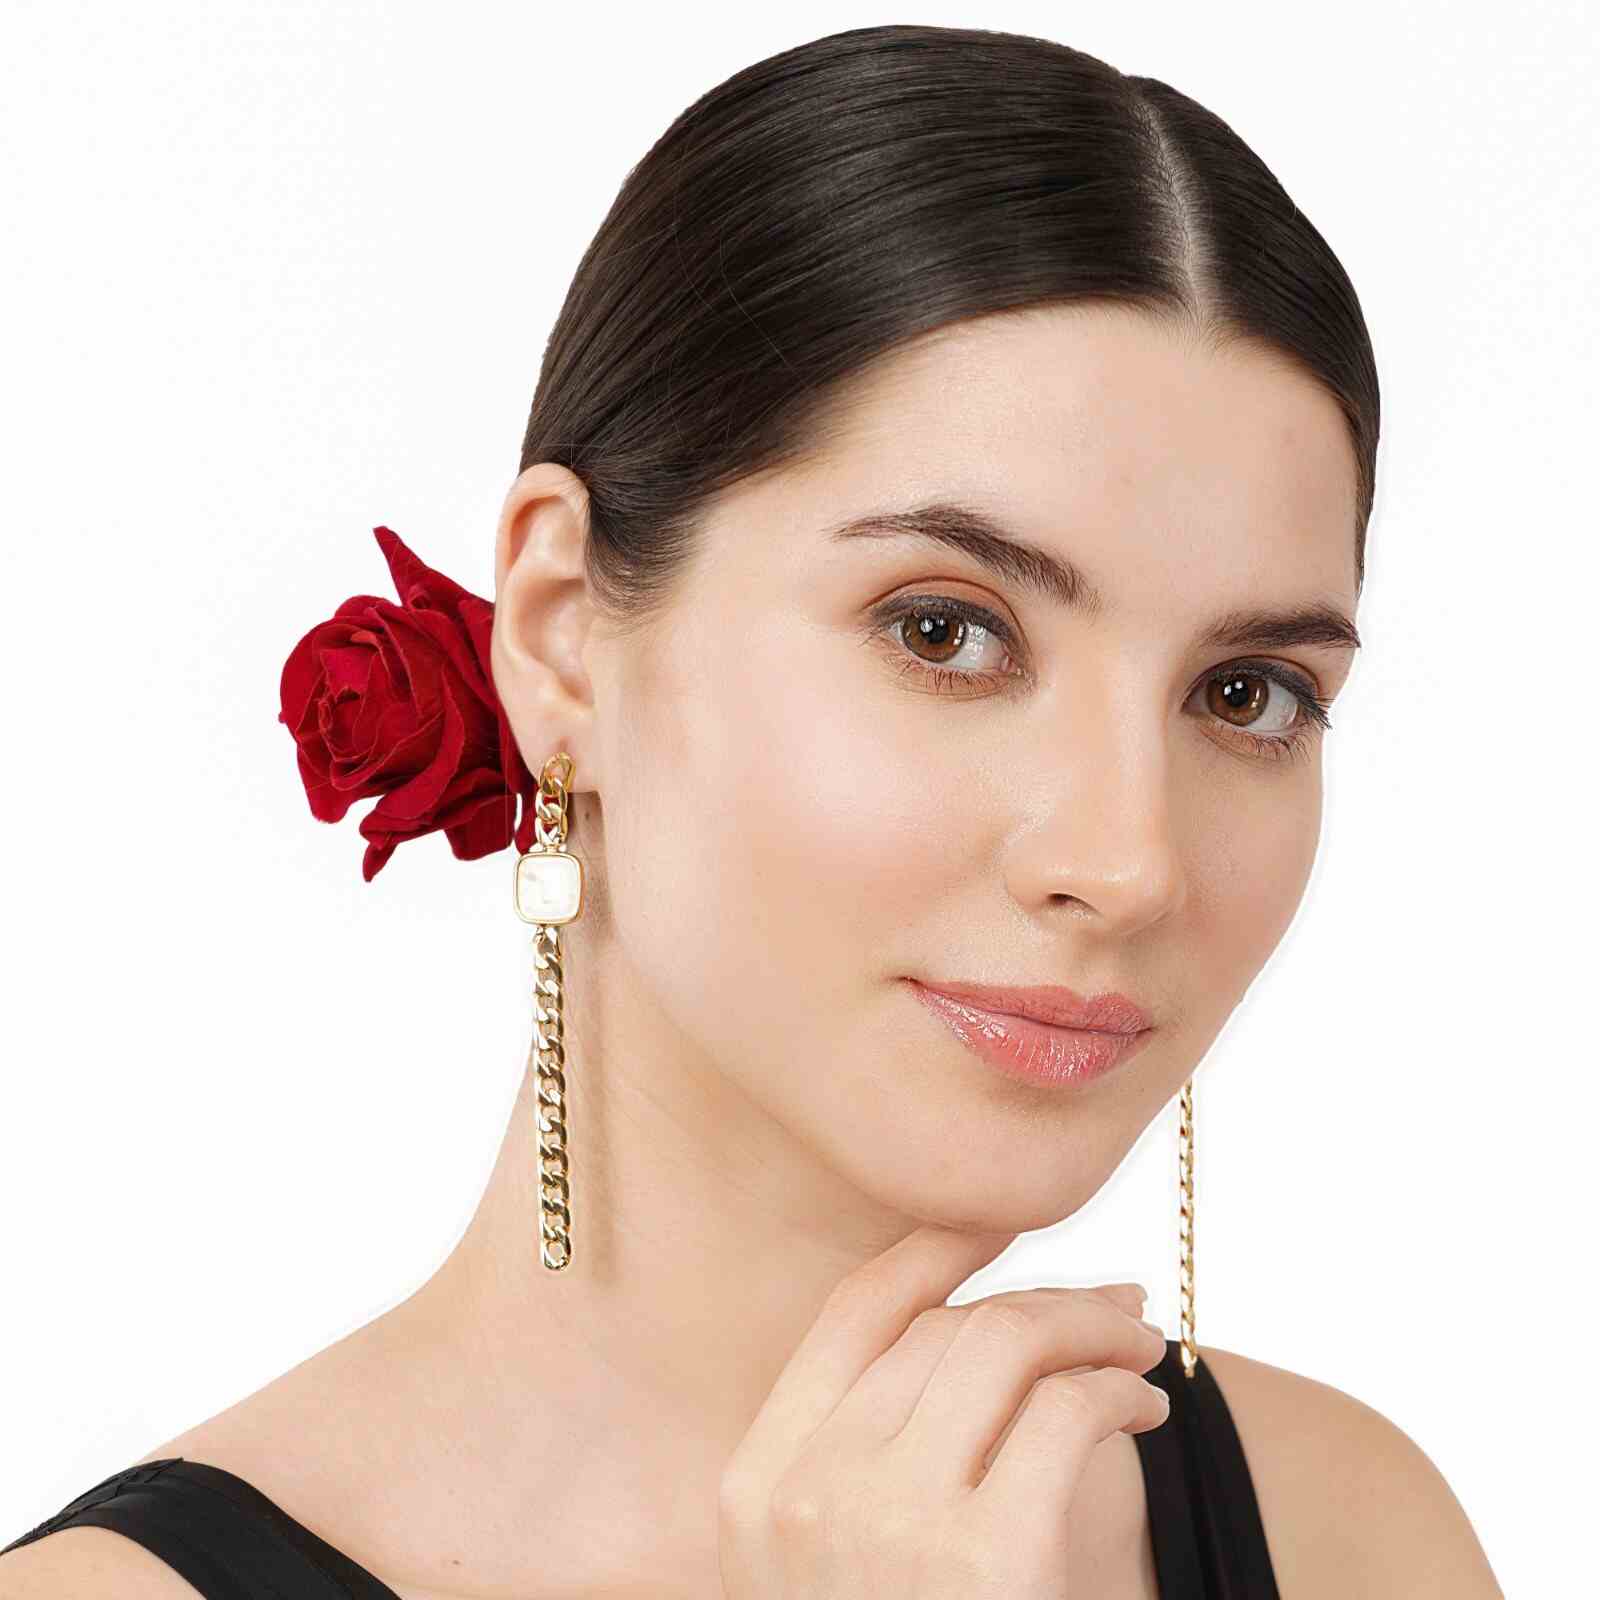 Buy quality Modern 14ct diamond earrings design in Pune